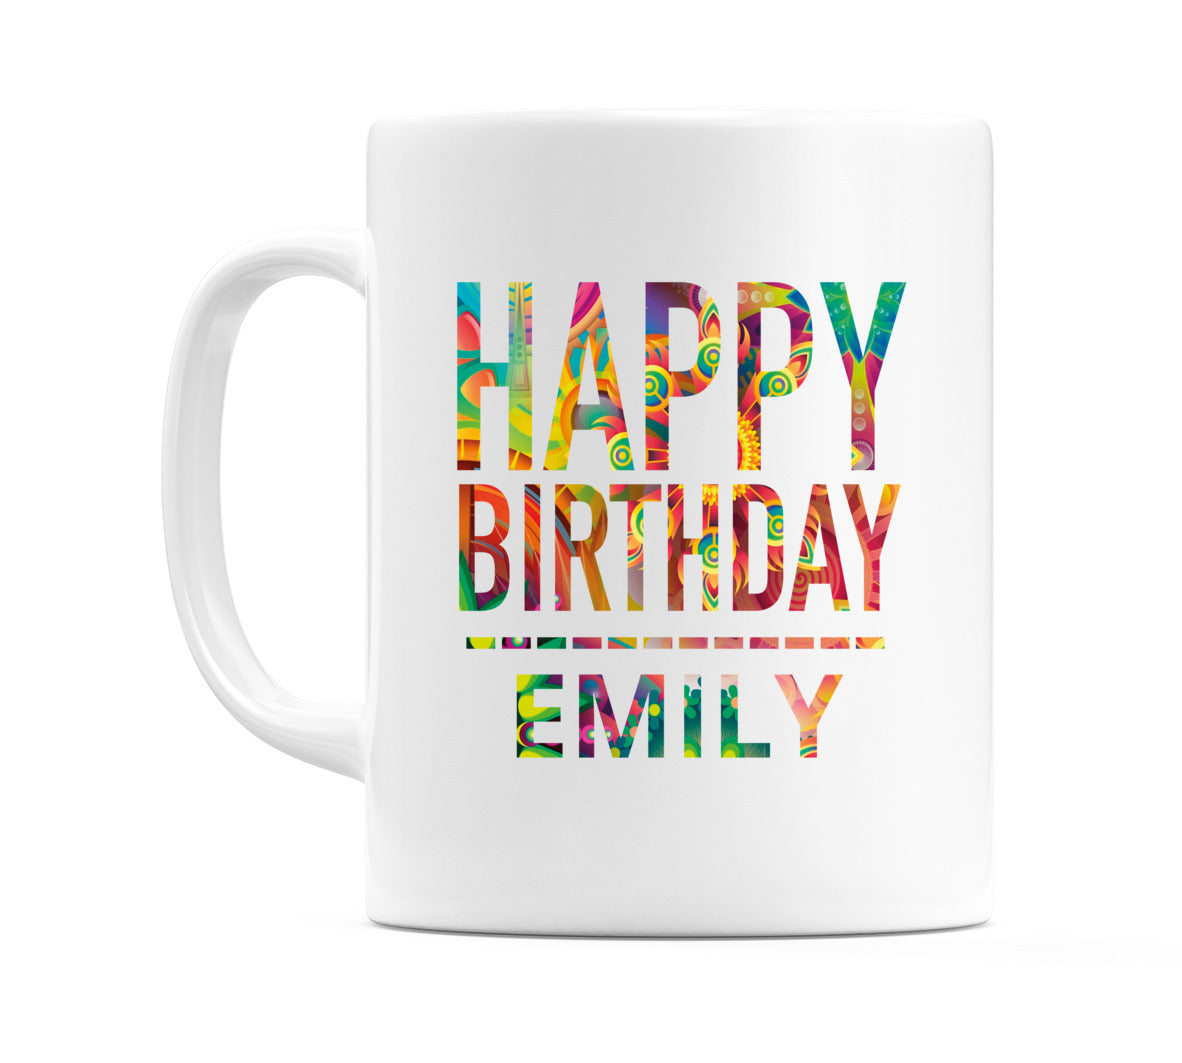 Happy Birthday Emily (Tie Dye Effect) Mug Cup by WeDoMugs